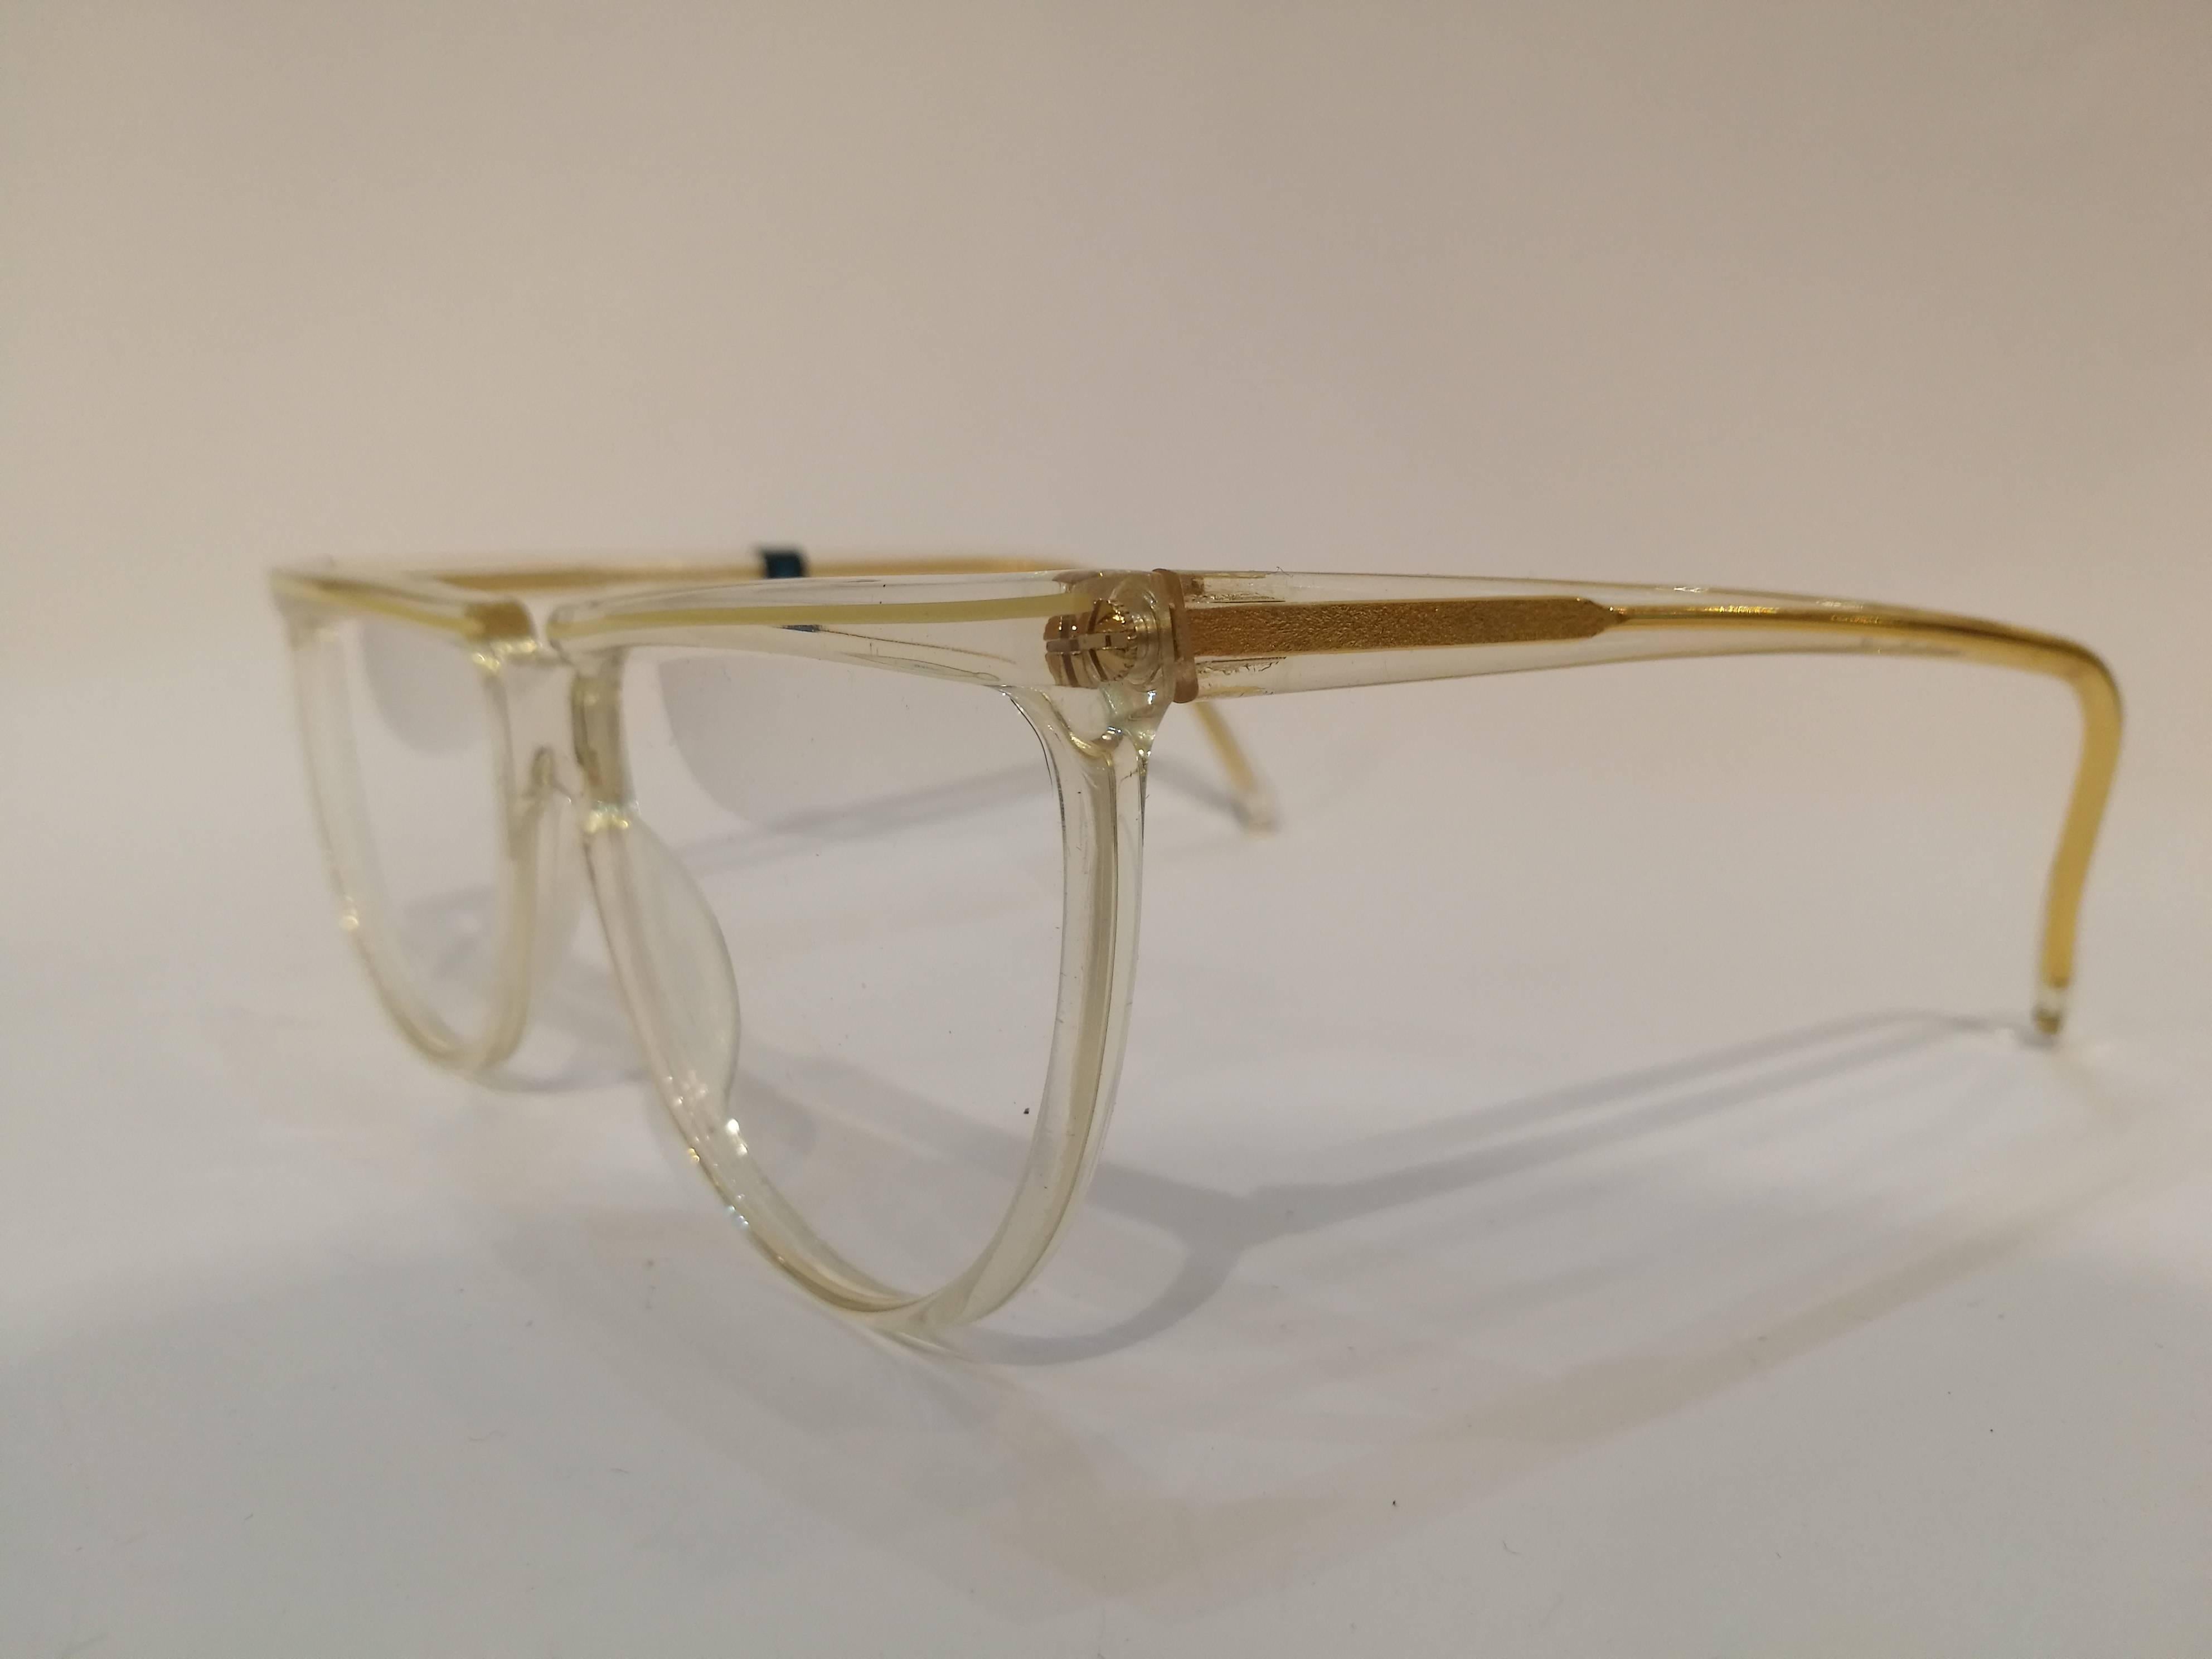 Beige Unworn Gianni Versace frame glasses